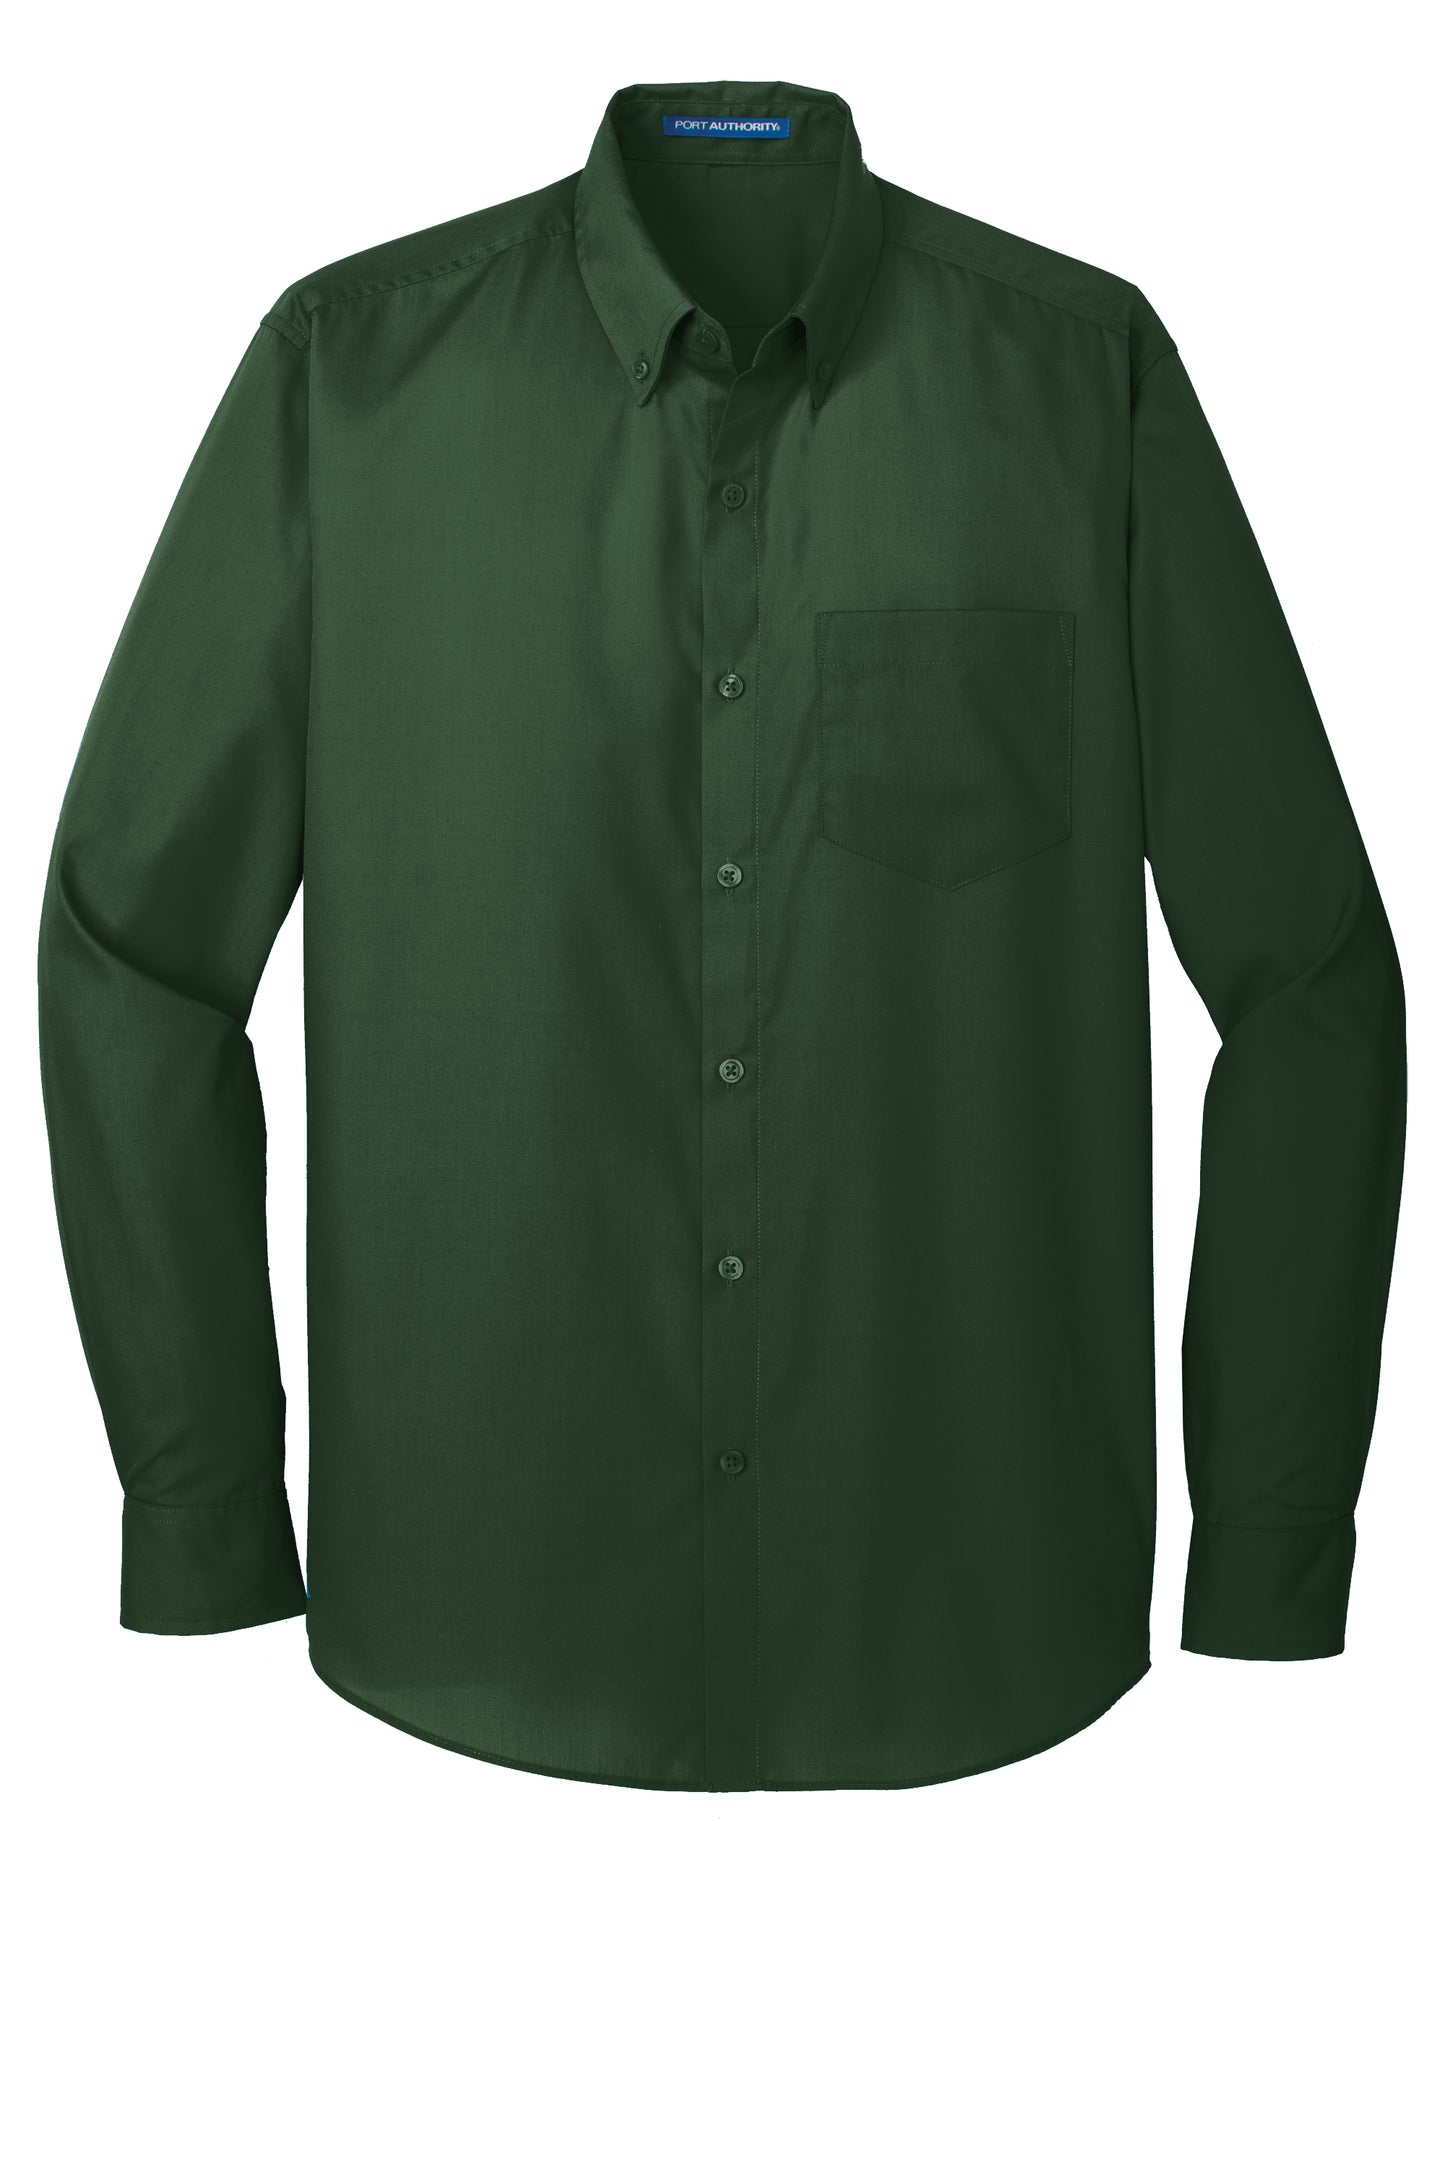 port authority long sleeve carefree poplin shirt deep forest green